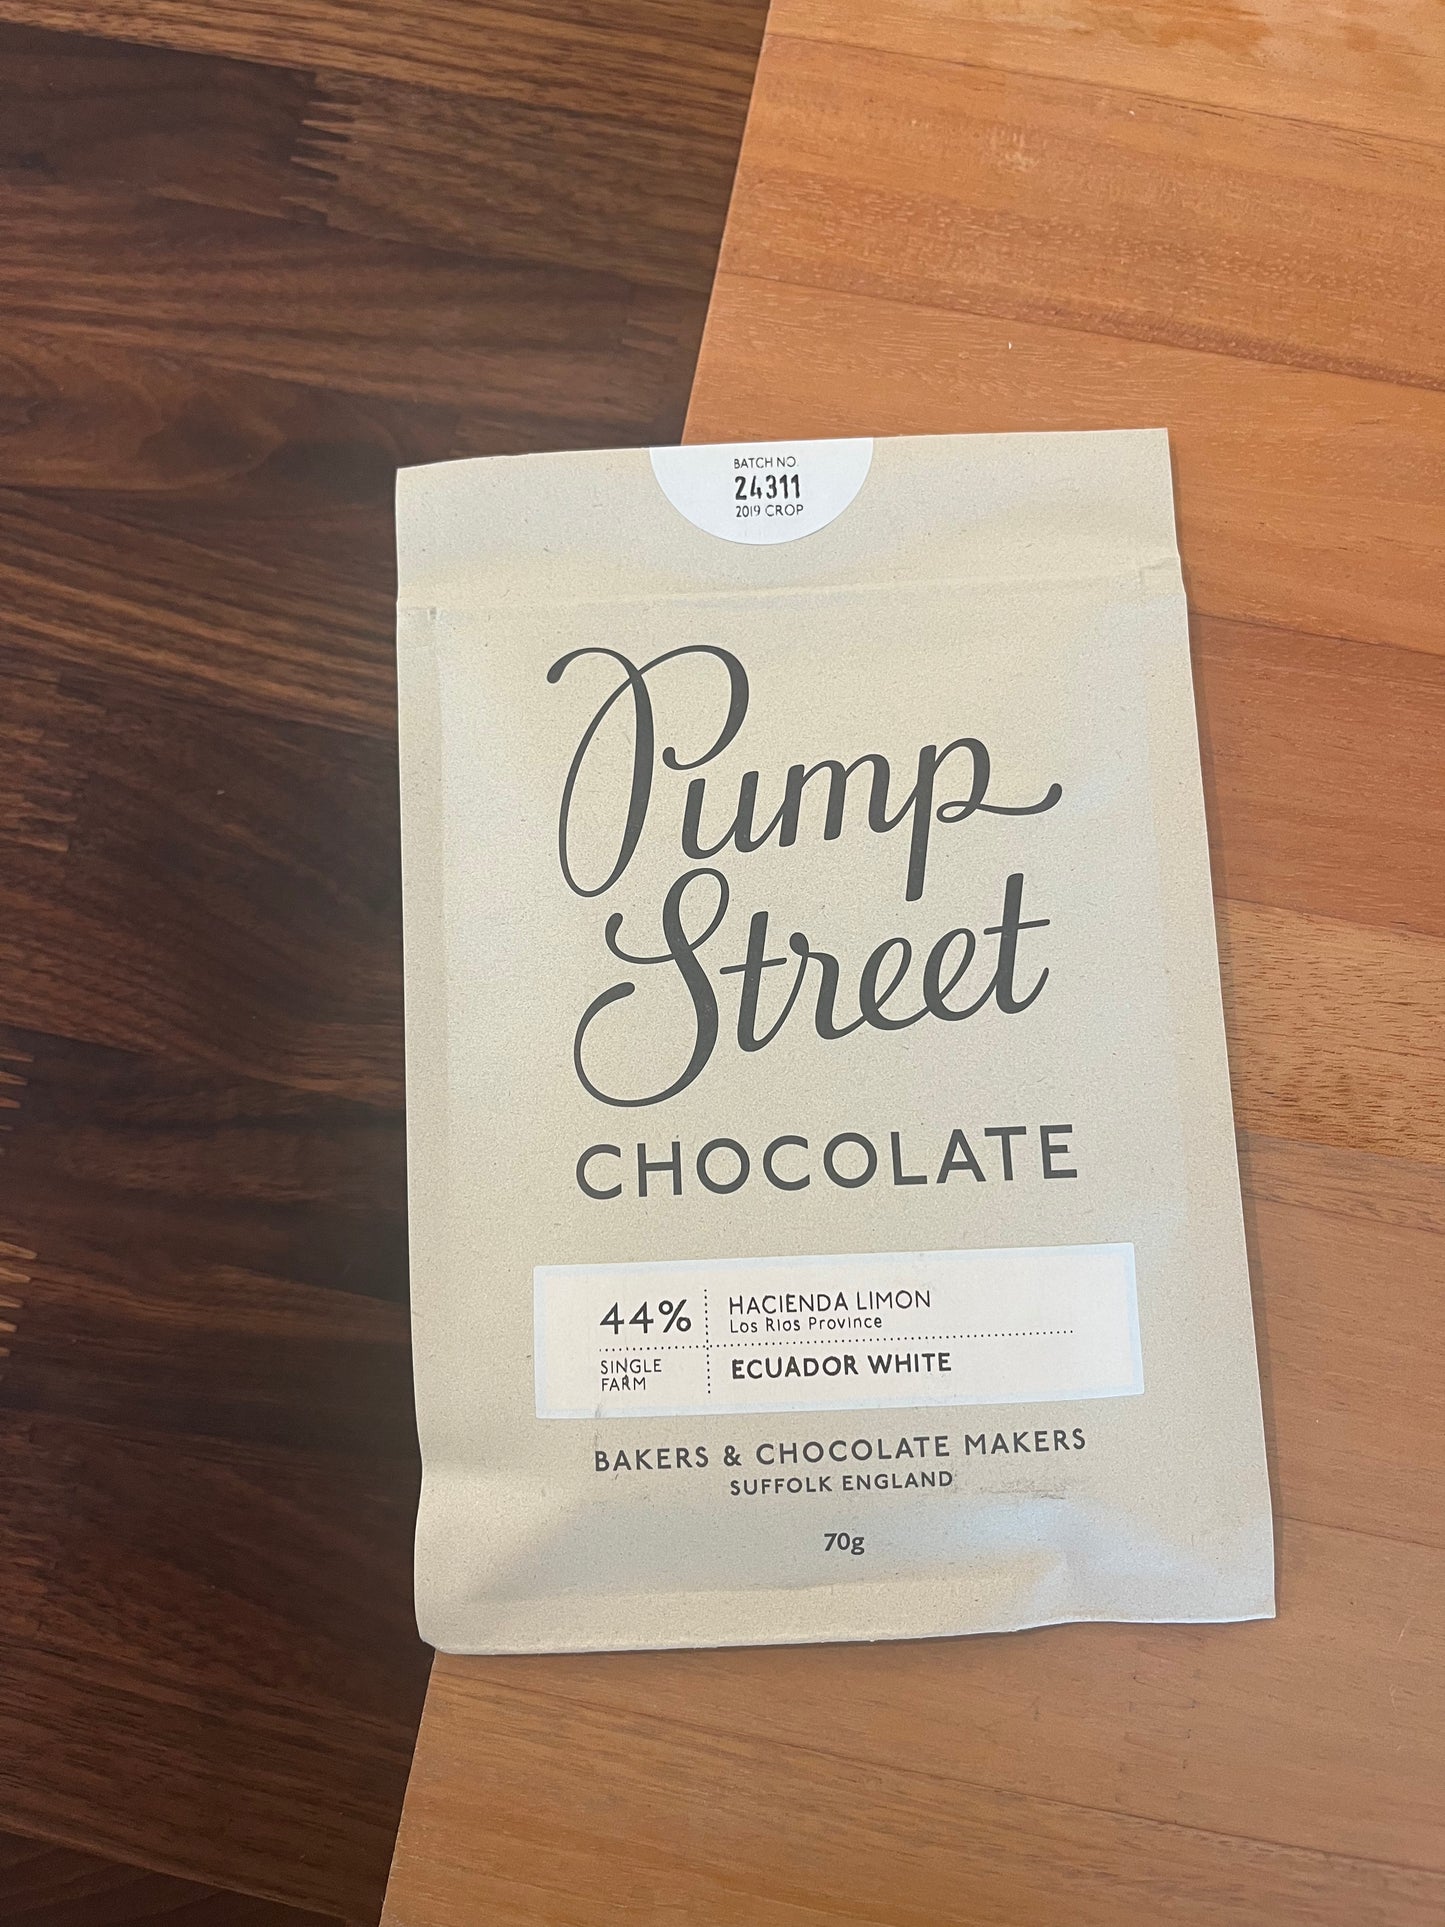 Pump Street 44% Ecuador white chocolate